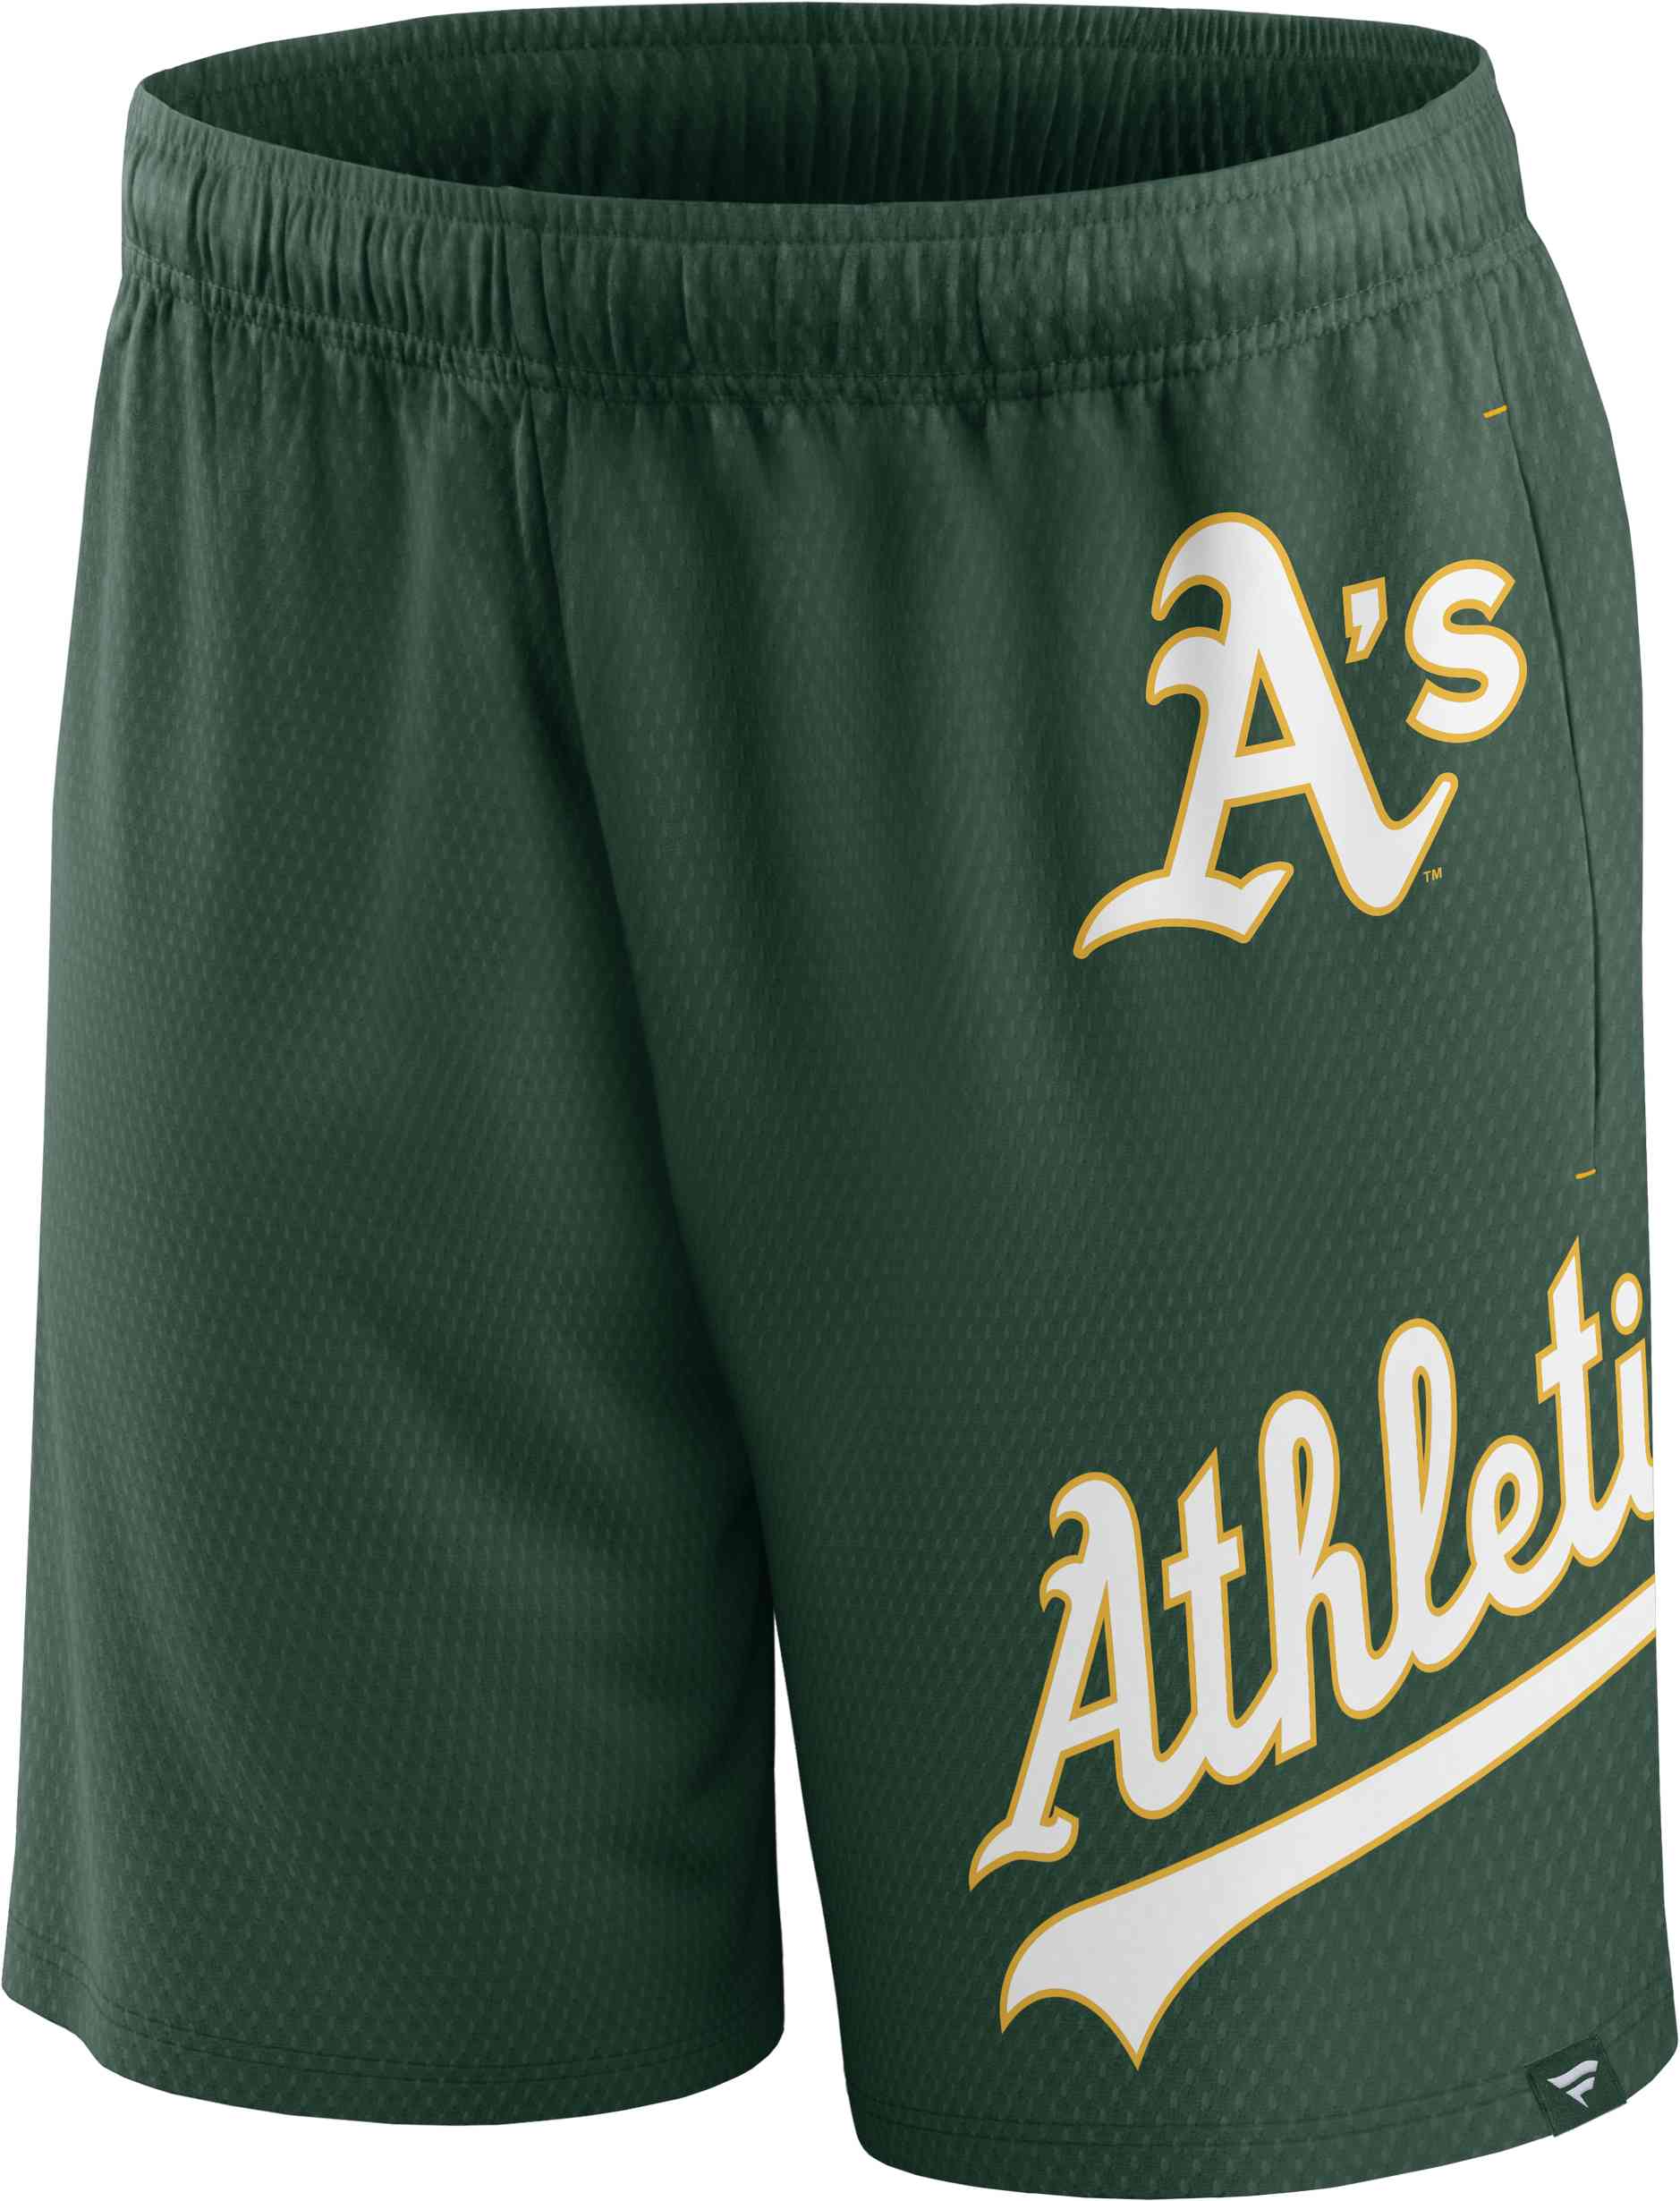 Fanatics - MLB Oakland Athletics Mesh Shorts